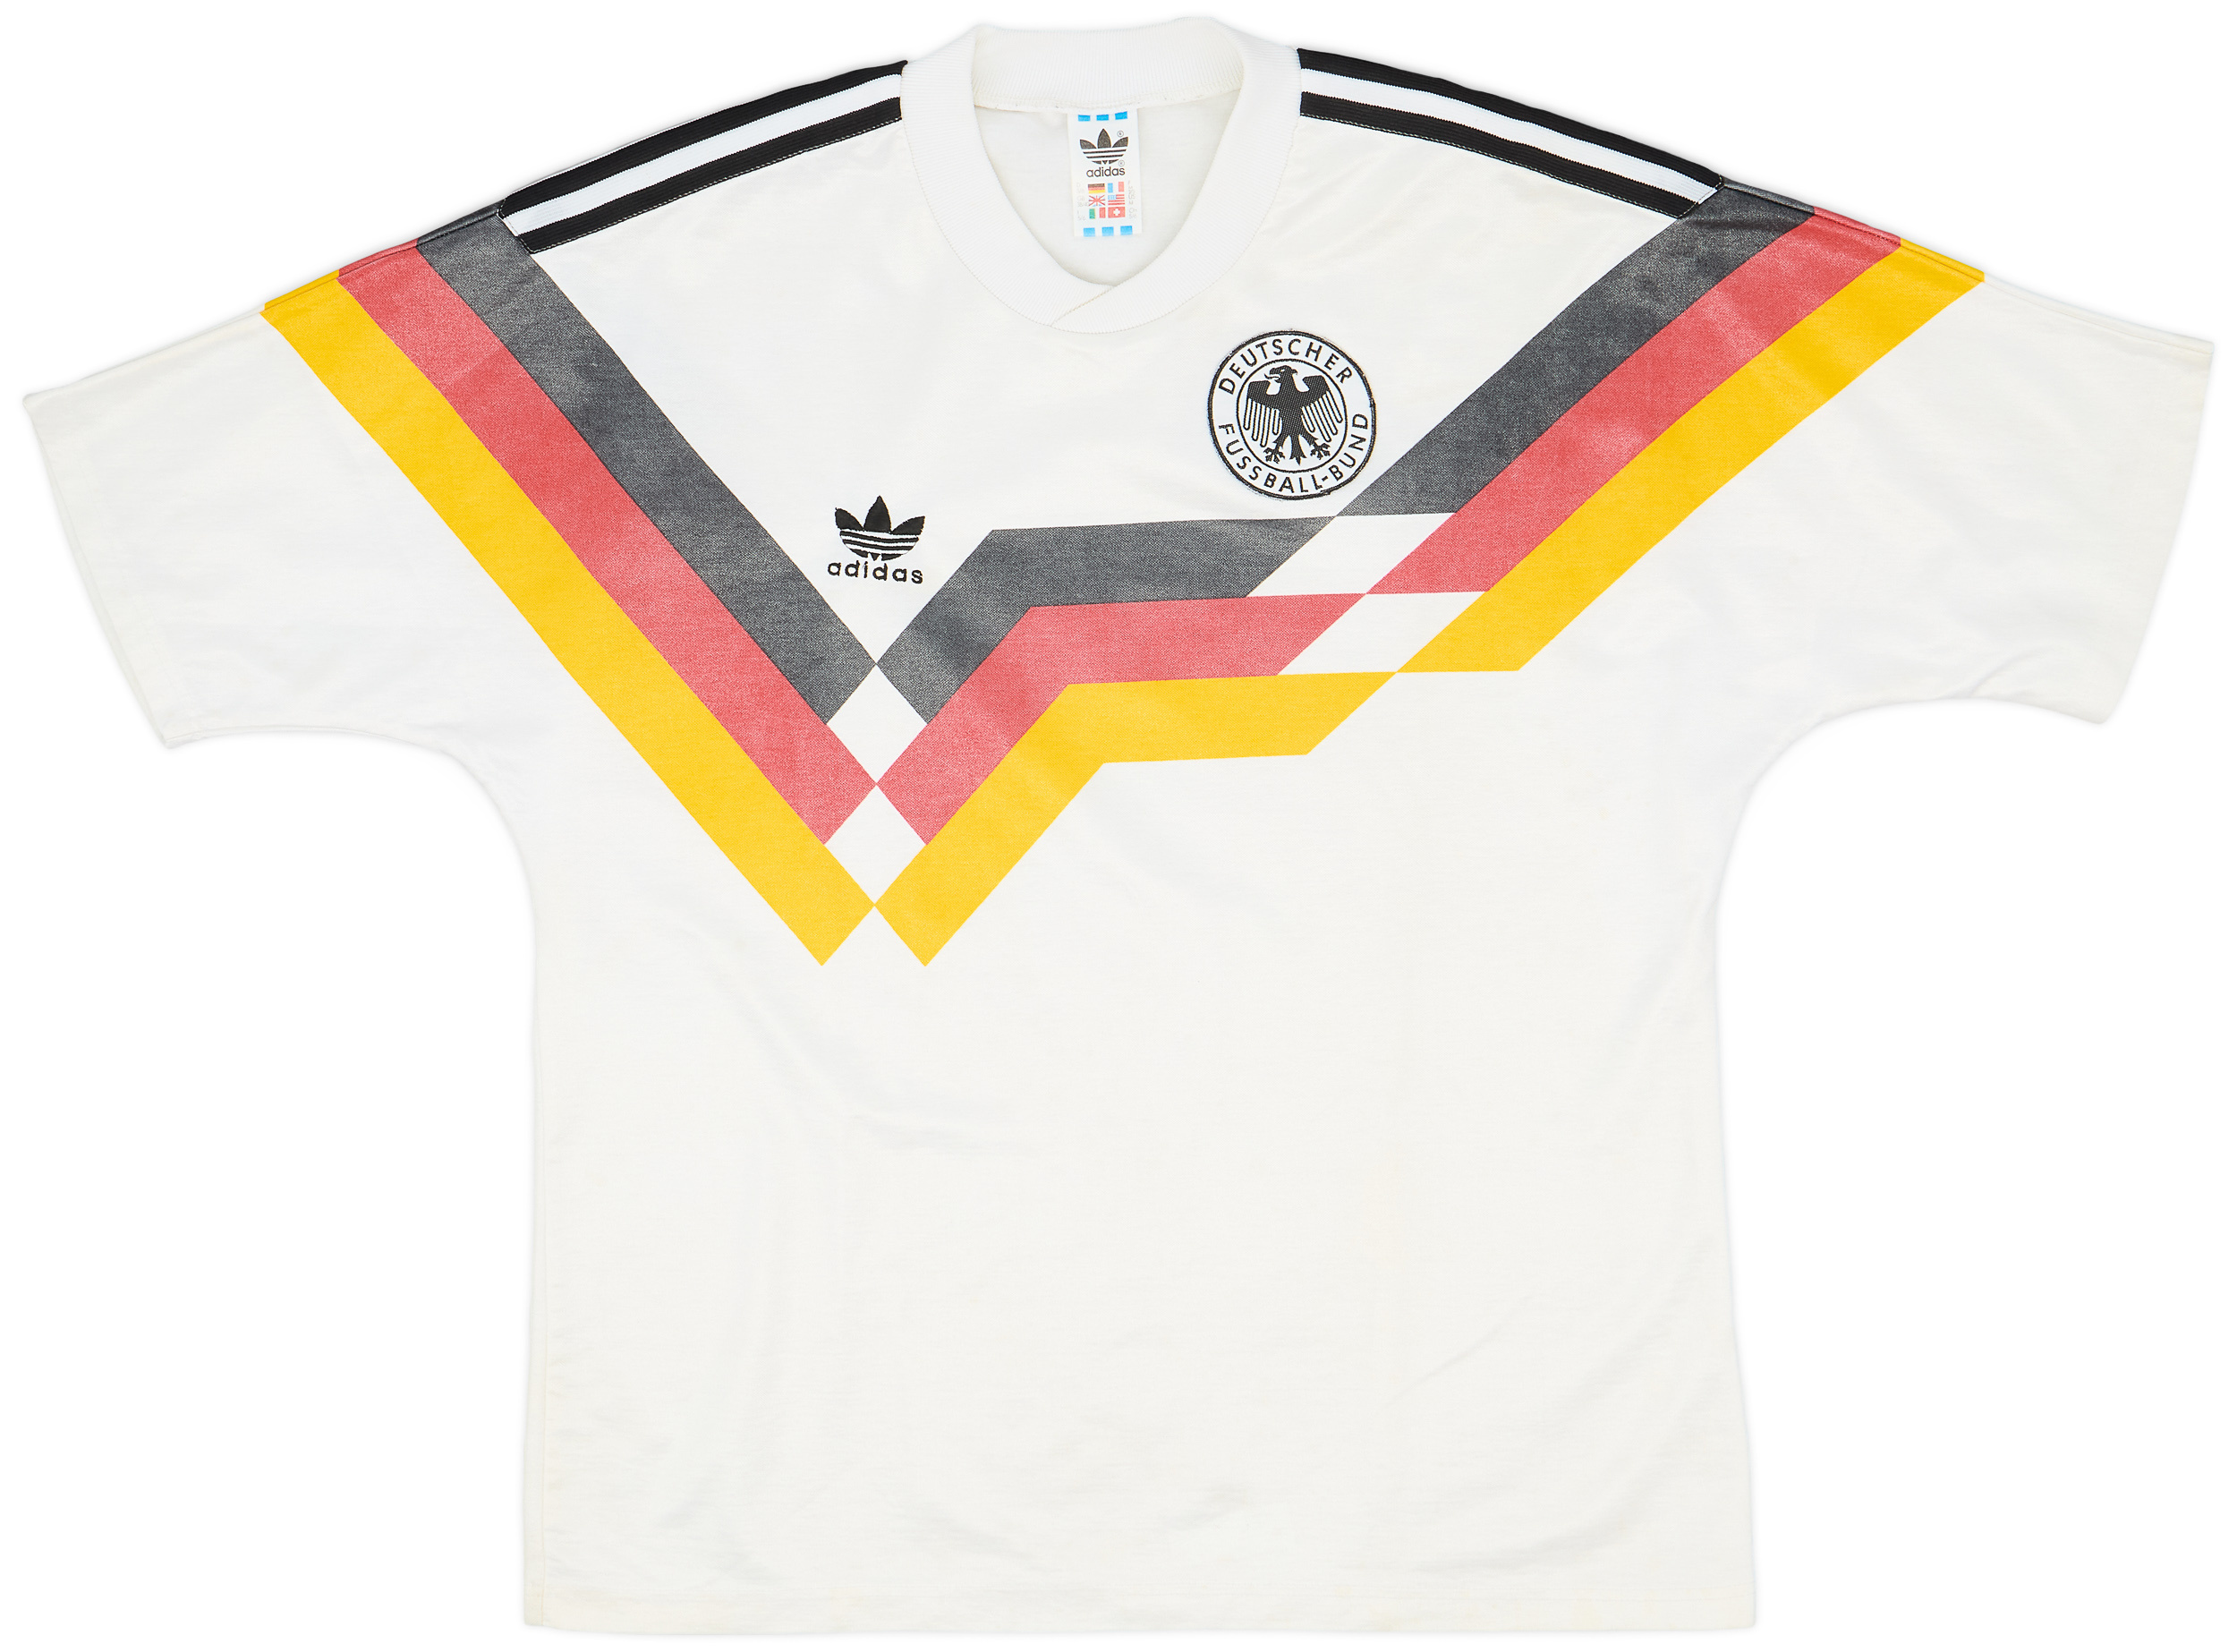 Retro Germany Shirt